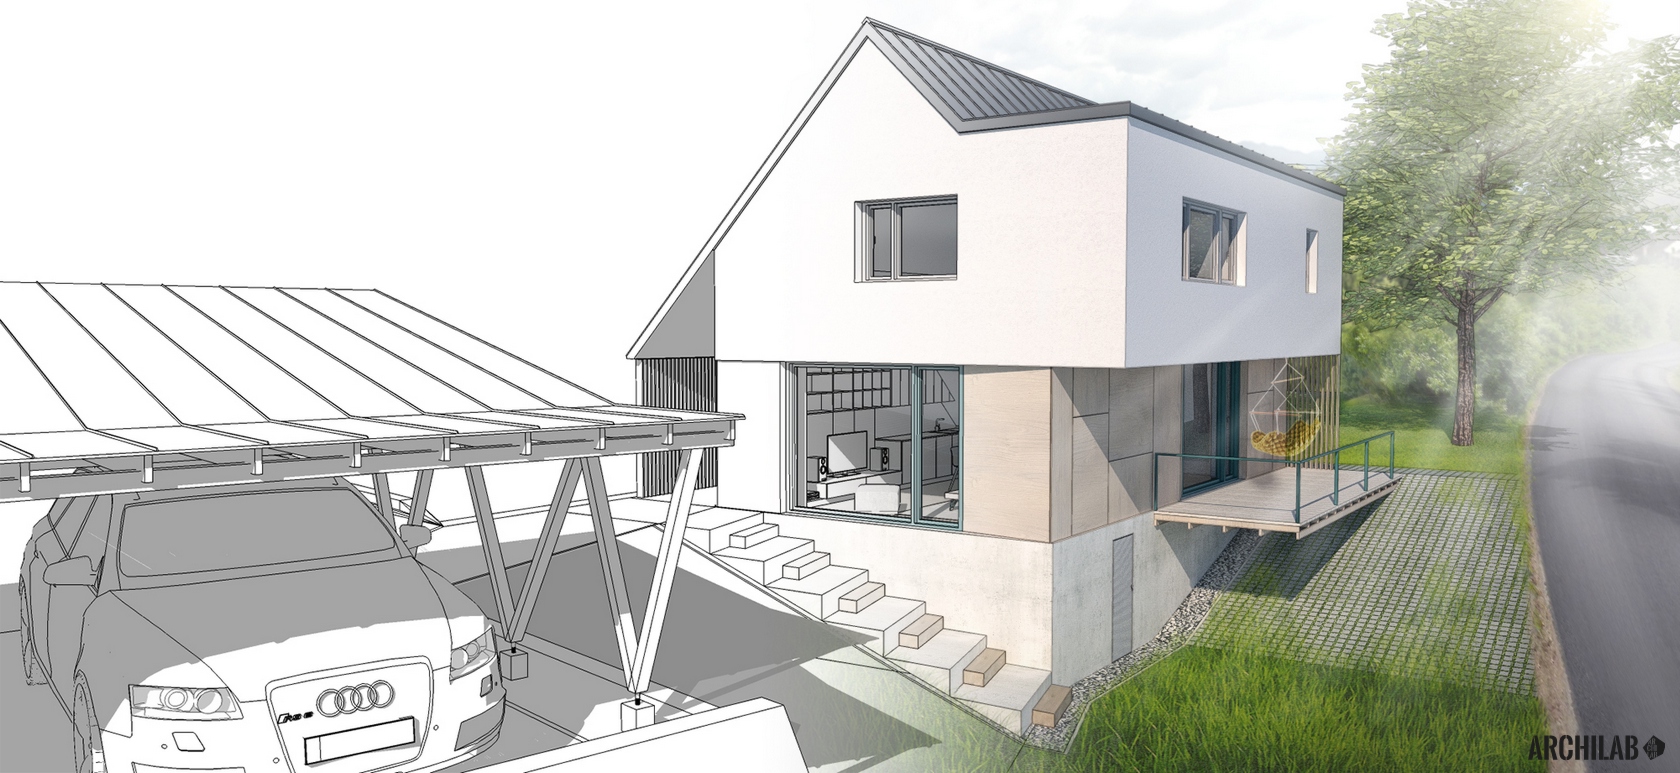 preco-oslovit-architekta-rodinny-dom-rekonstrukcia-navrh-archilab-vizualizacia-schema-sedlova strecha-03